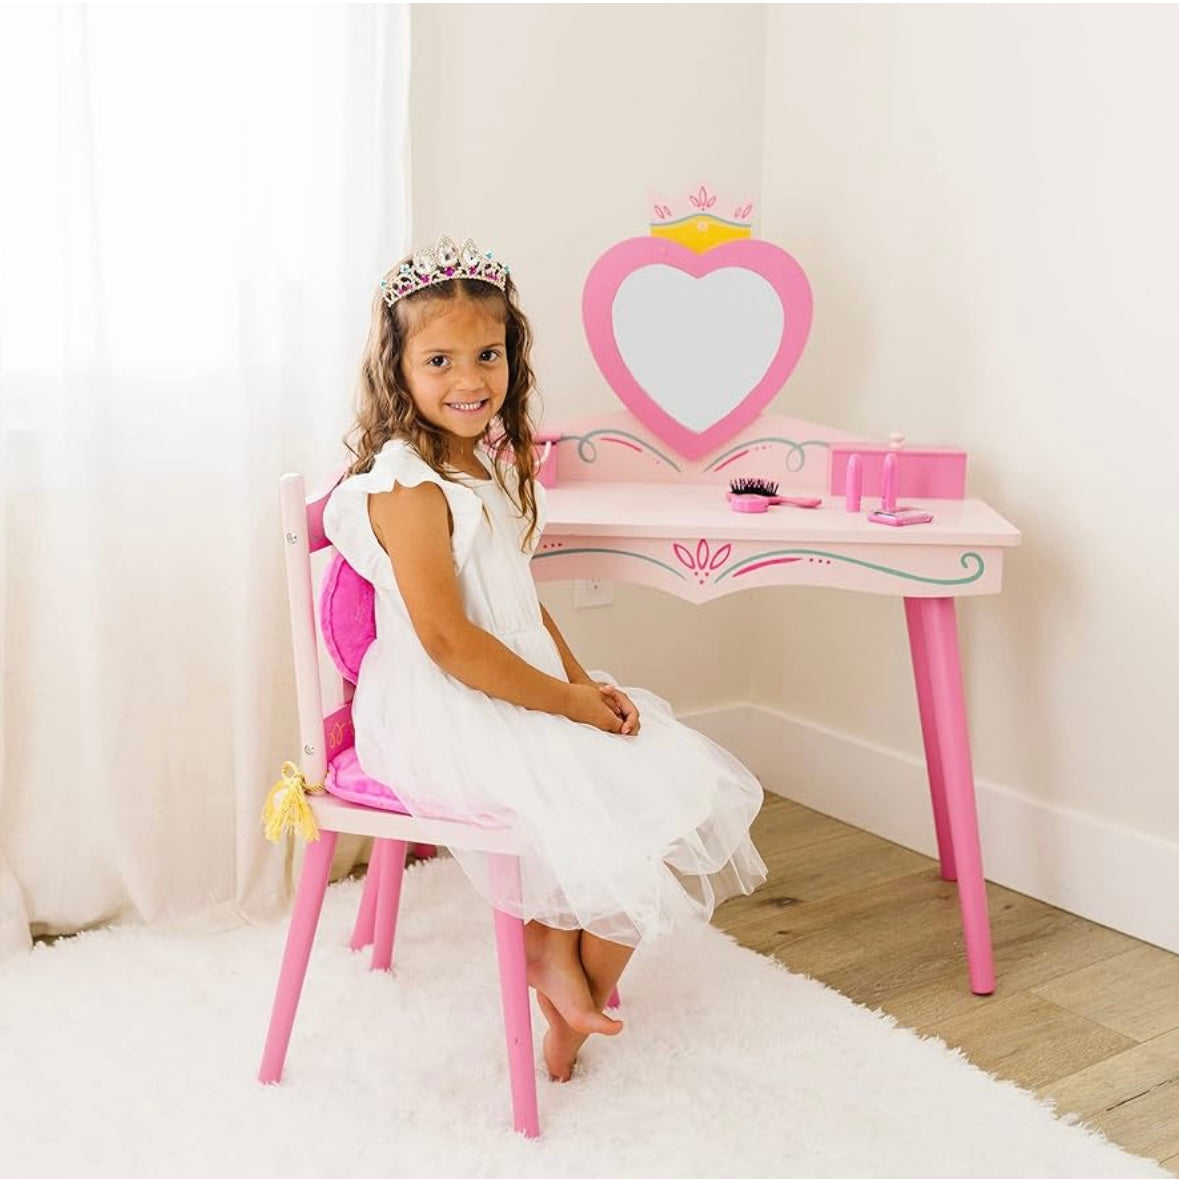 Wildkin Princess Wooden Vanity & Chair Set - w/Mirror, Jewelry, Music Box